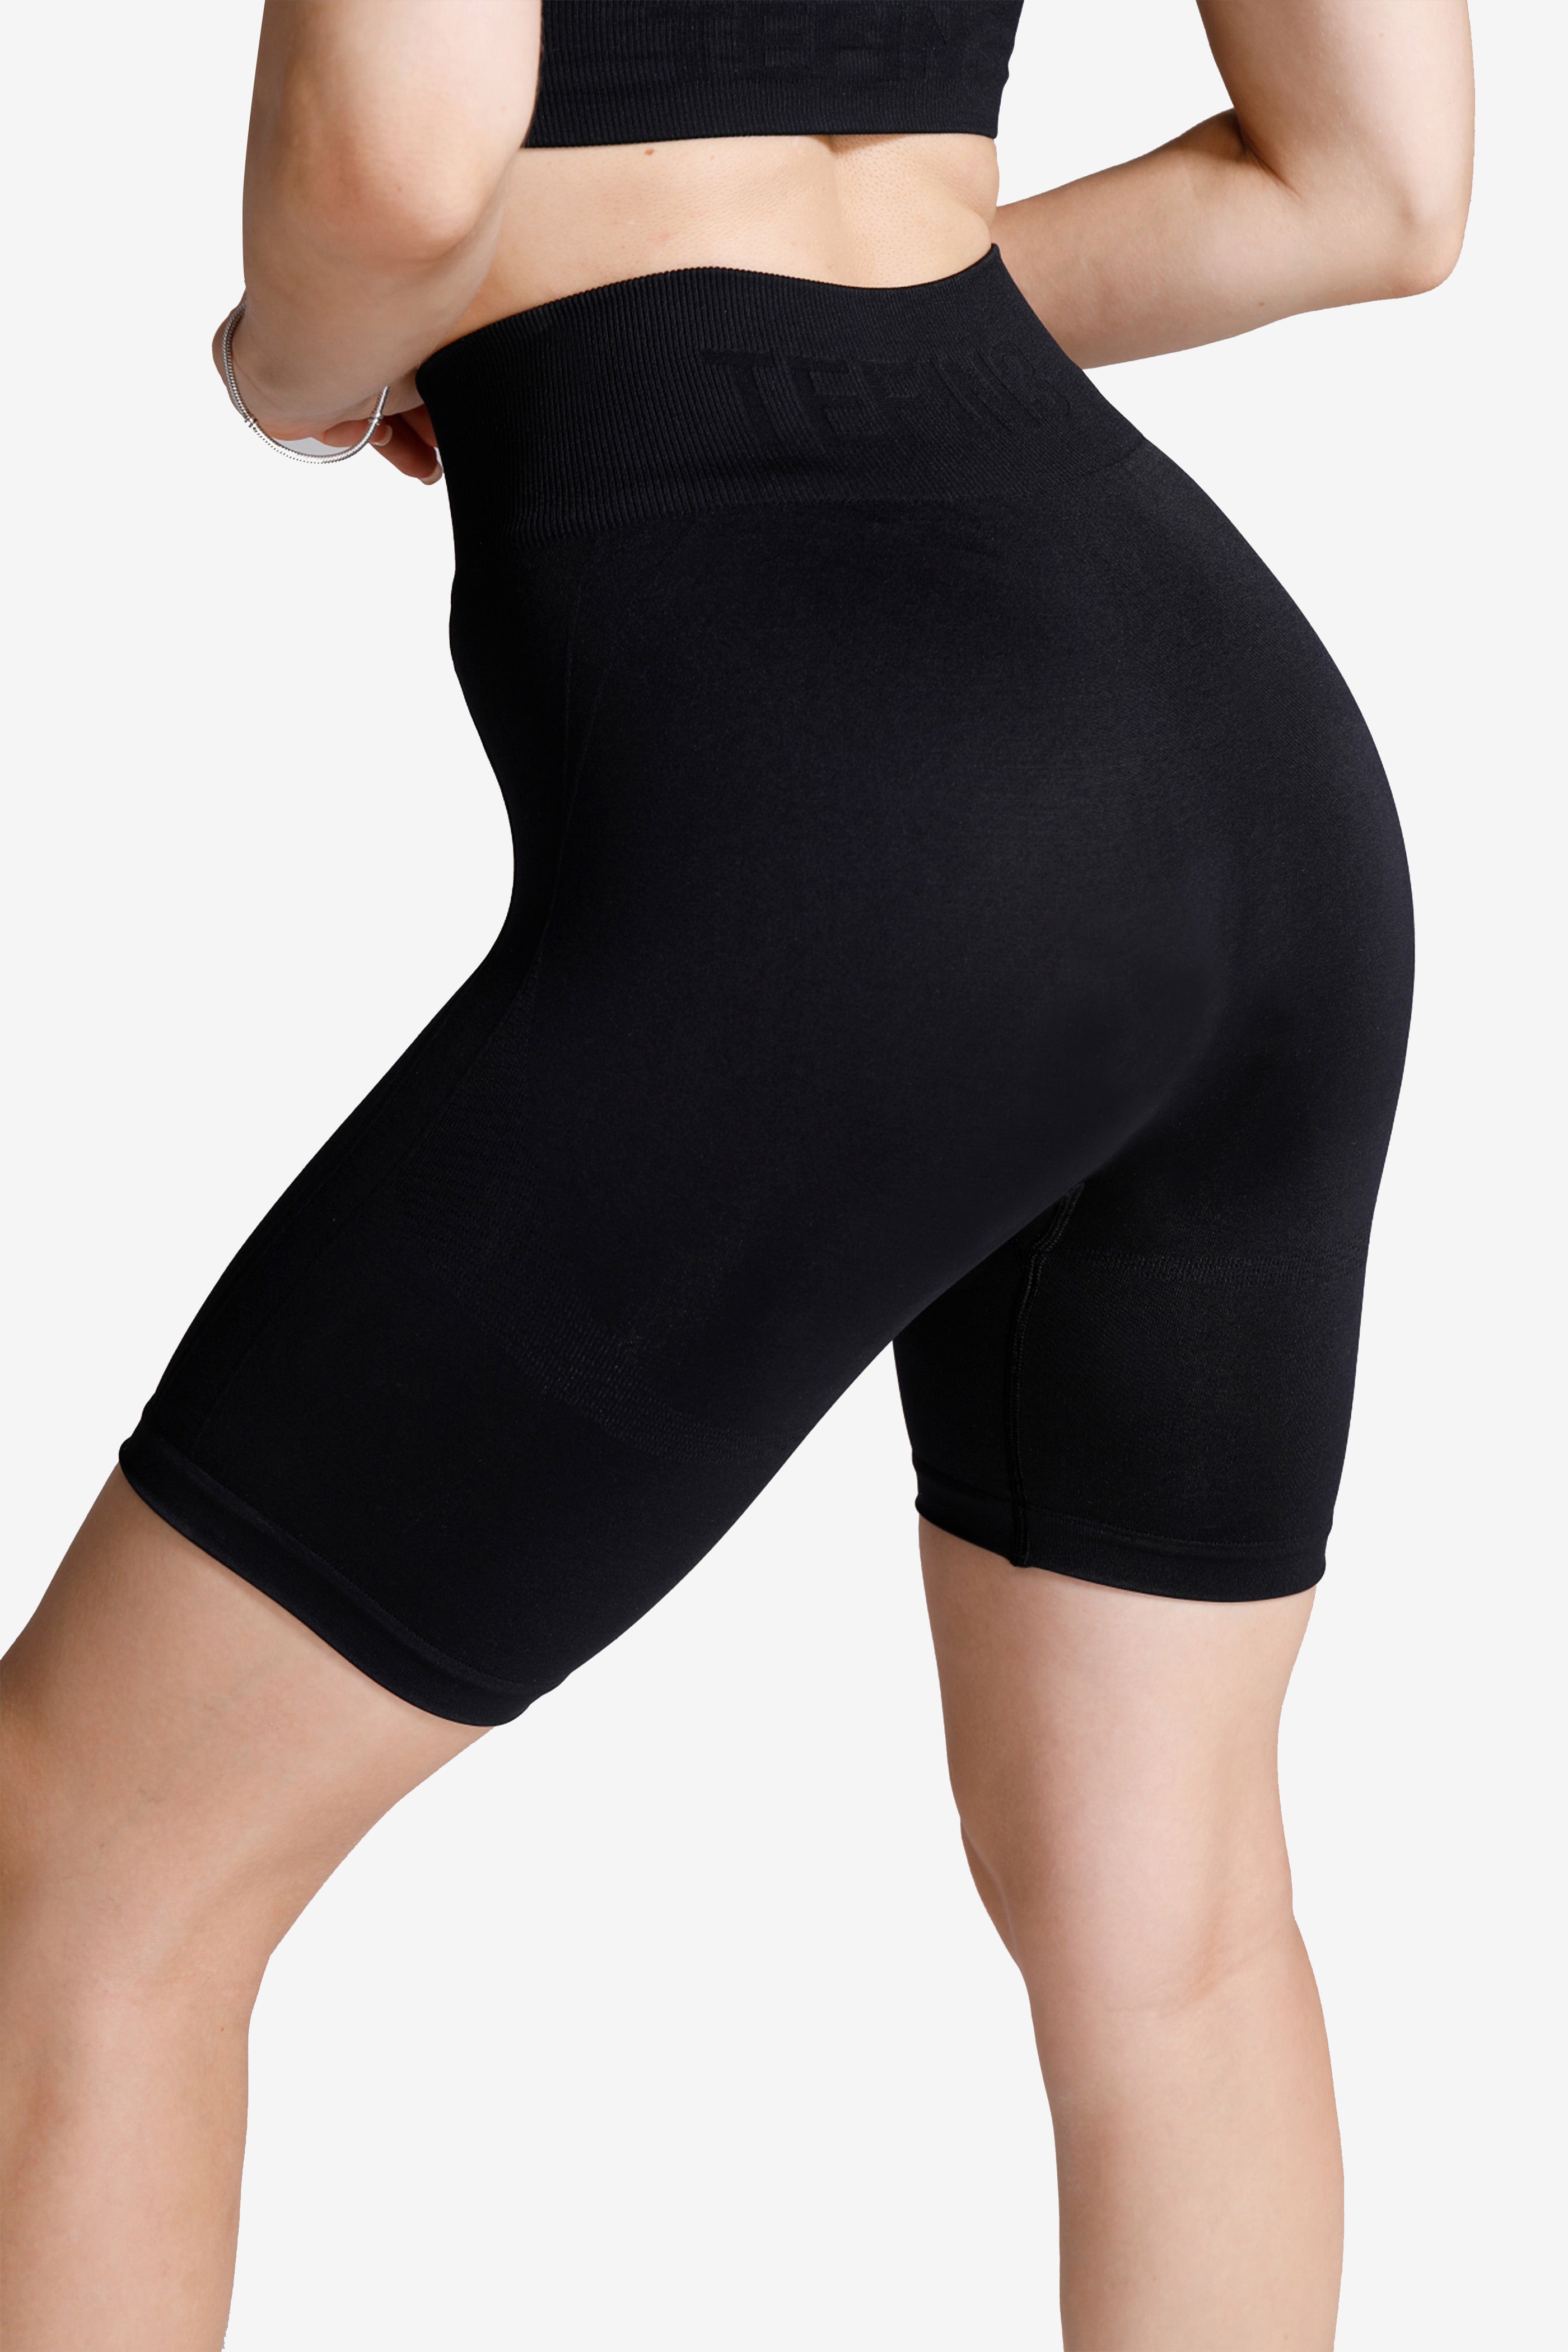 TEFIN3 Comfy Seamless Women Workout Black Shorts